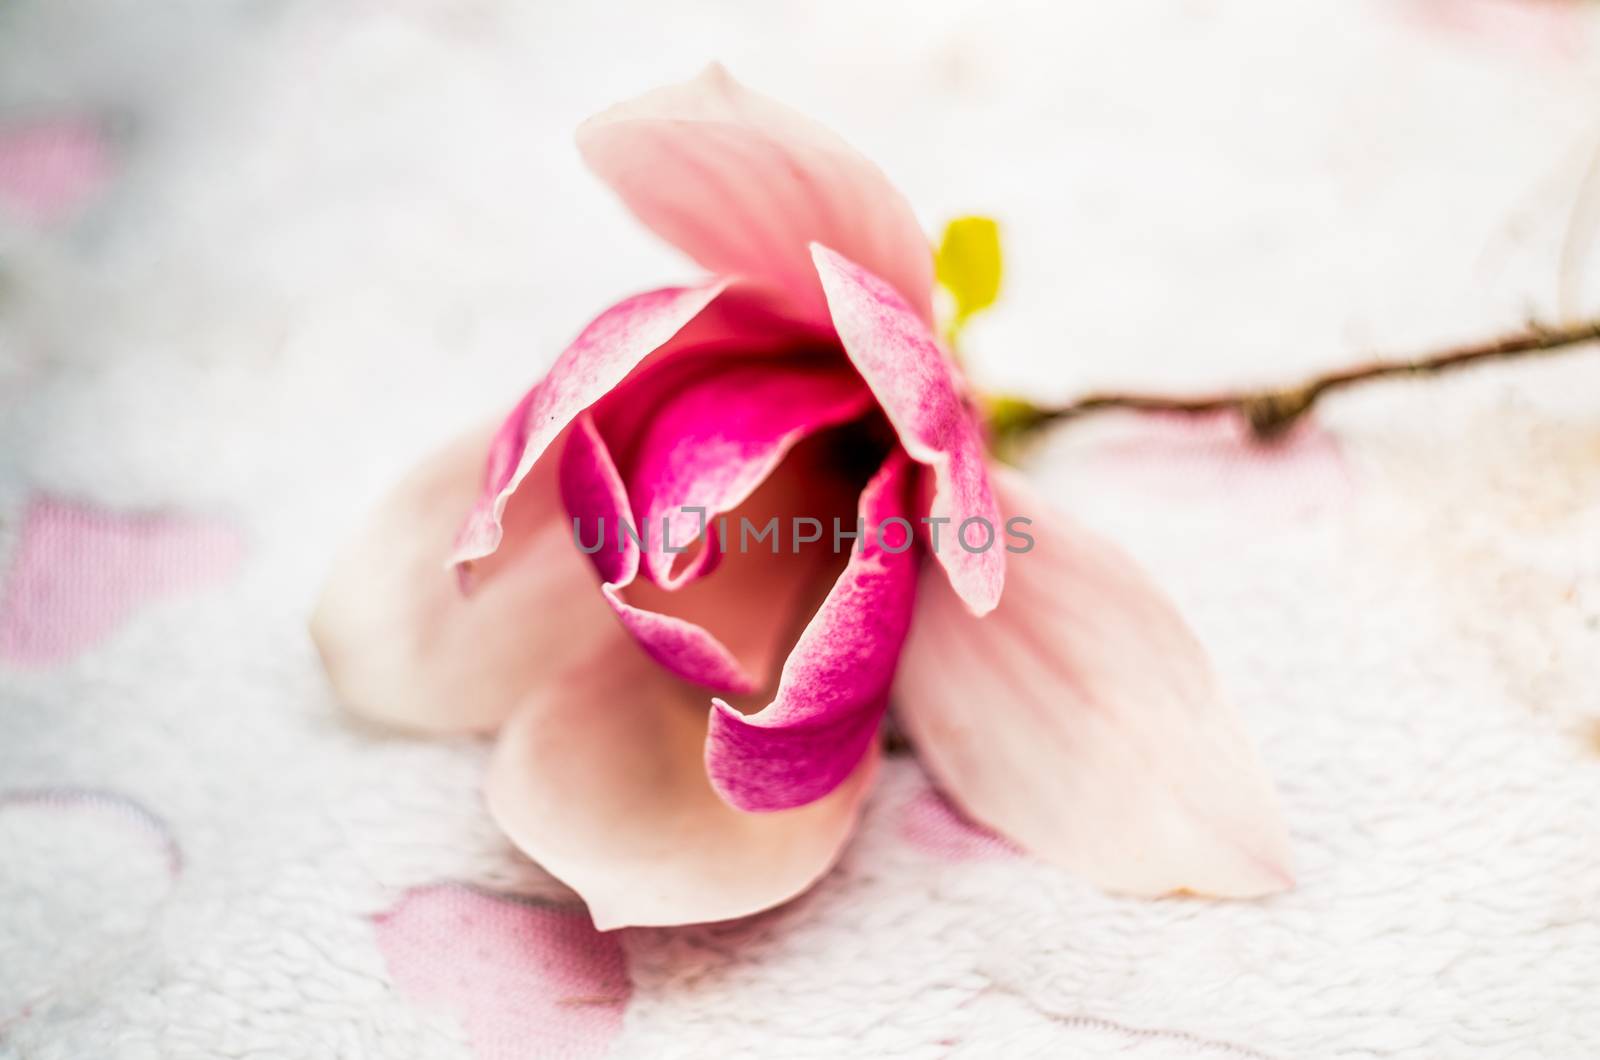 pink rose on the pink soft rug by Desperada